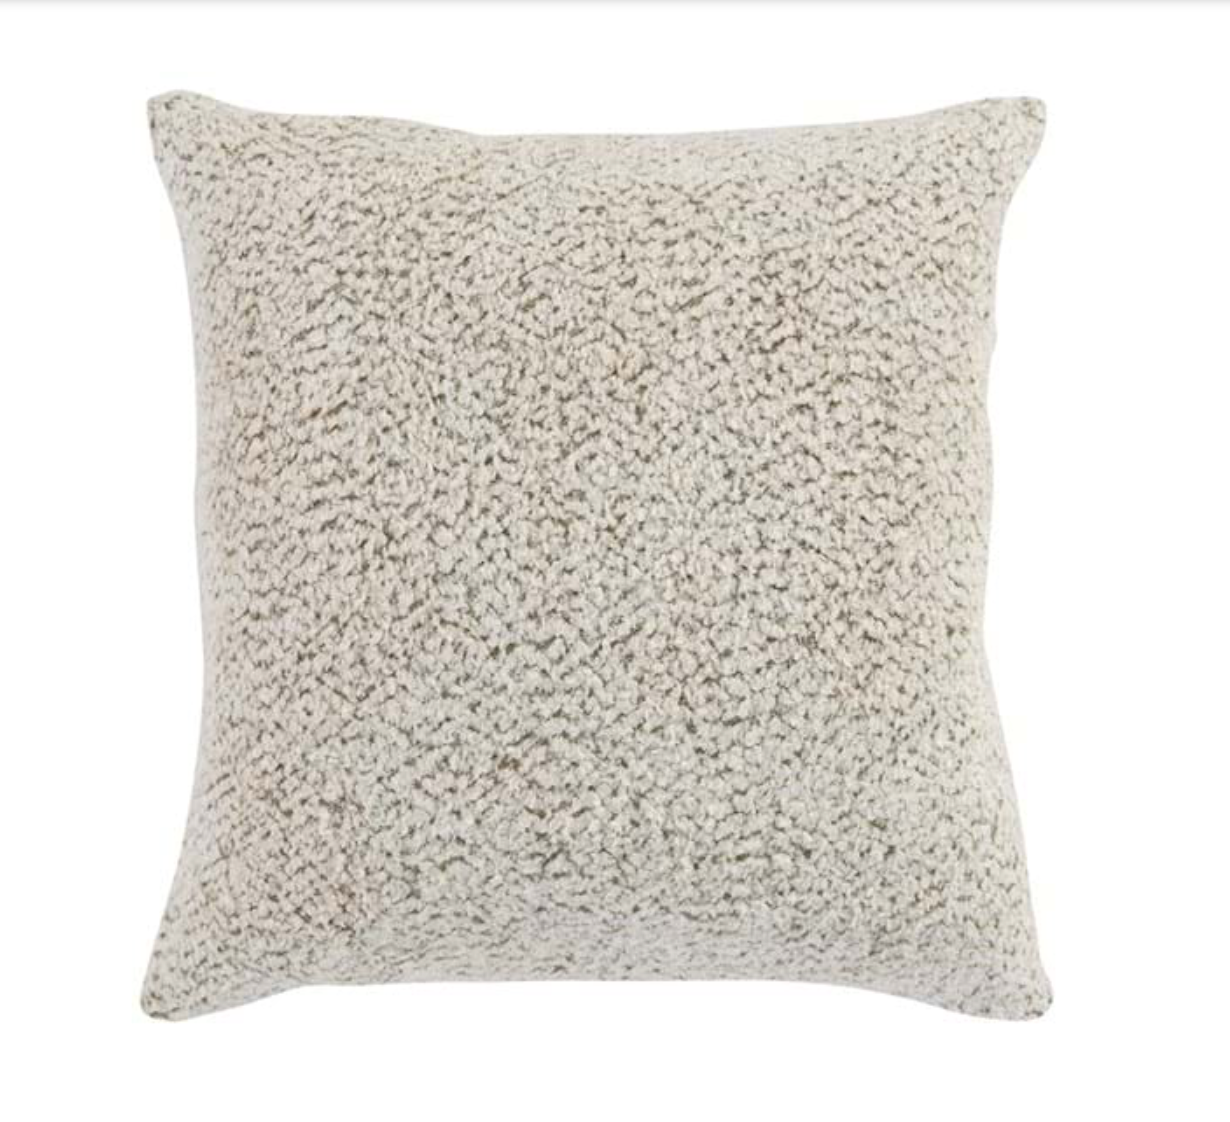 Pillow, Maris - Danshire Market and Design 